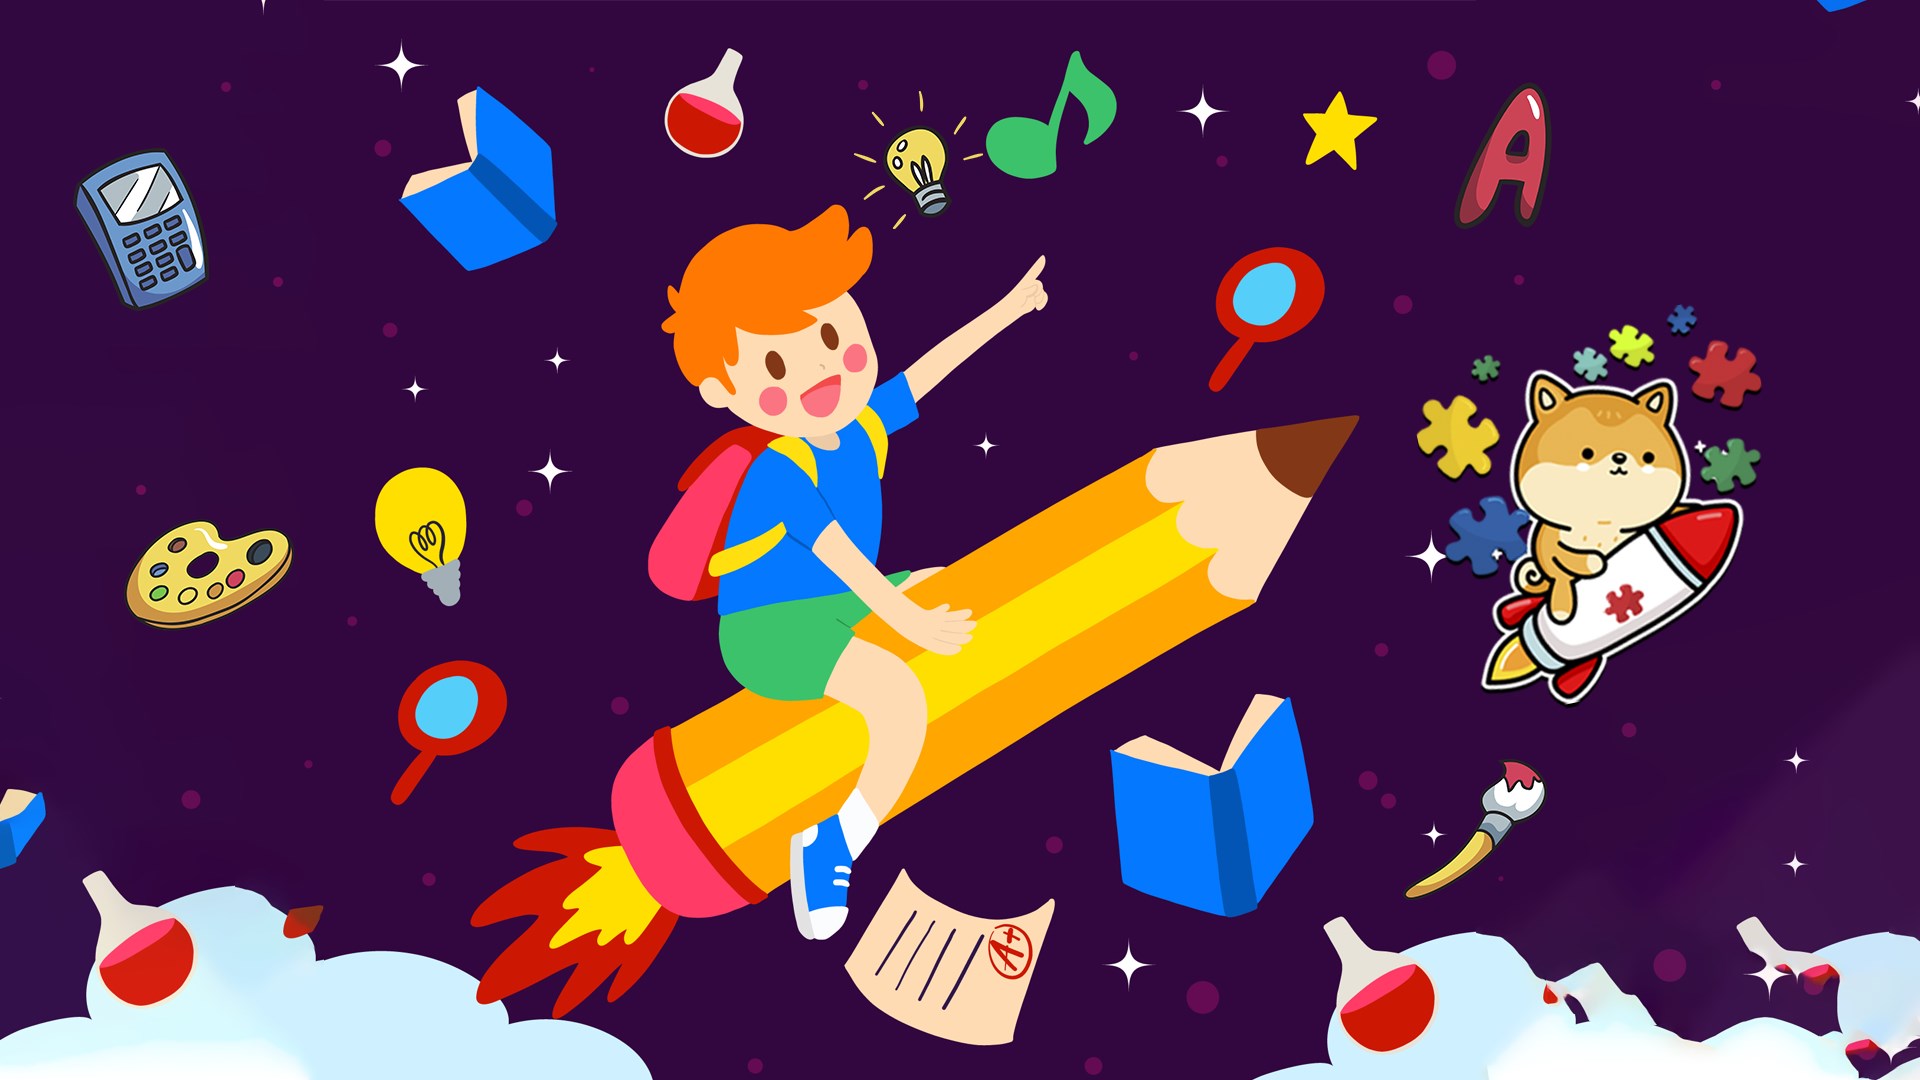 Get Kids Preschool Learning Games - Microsoft Store